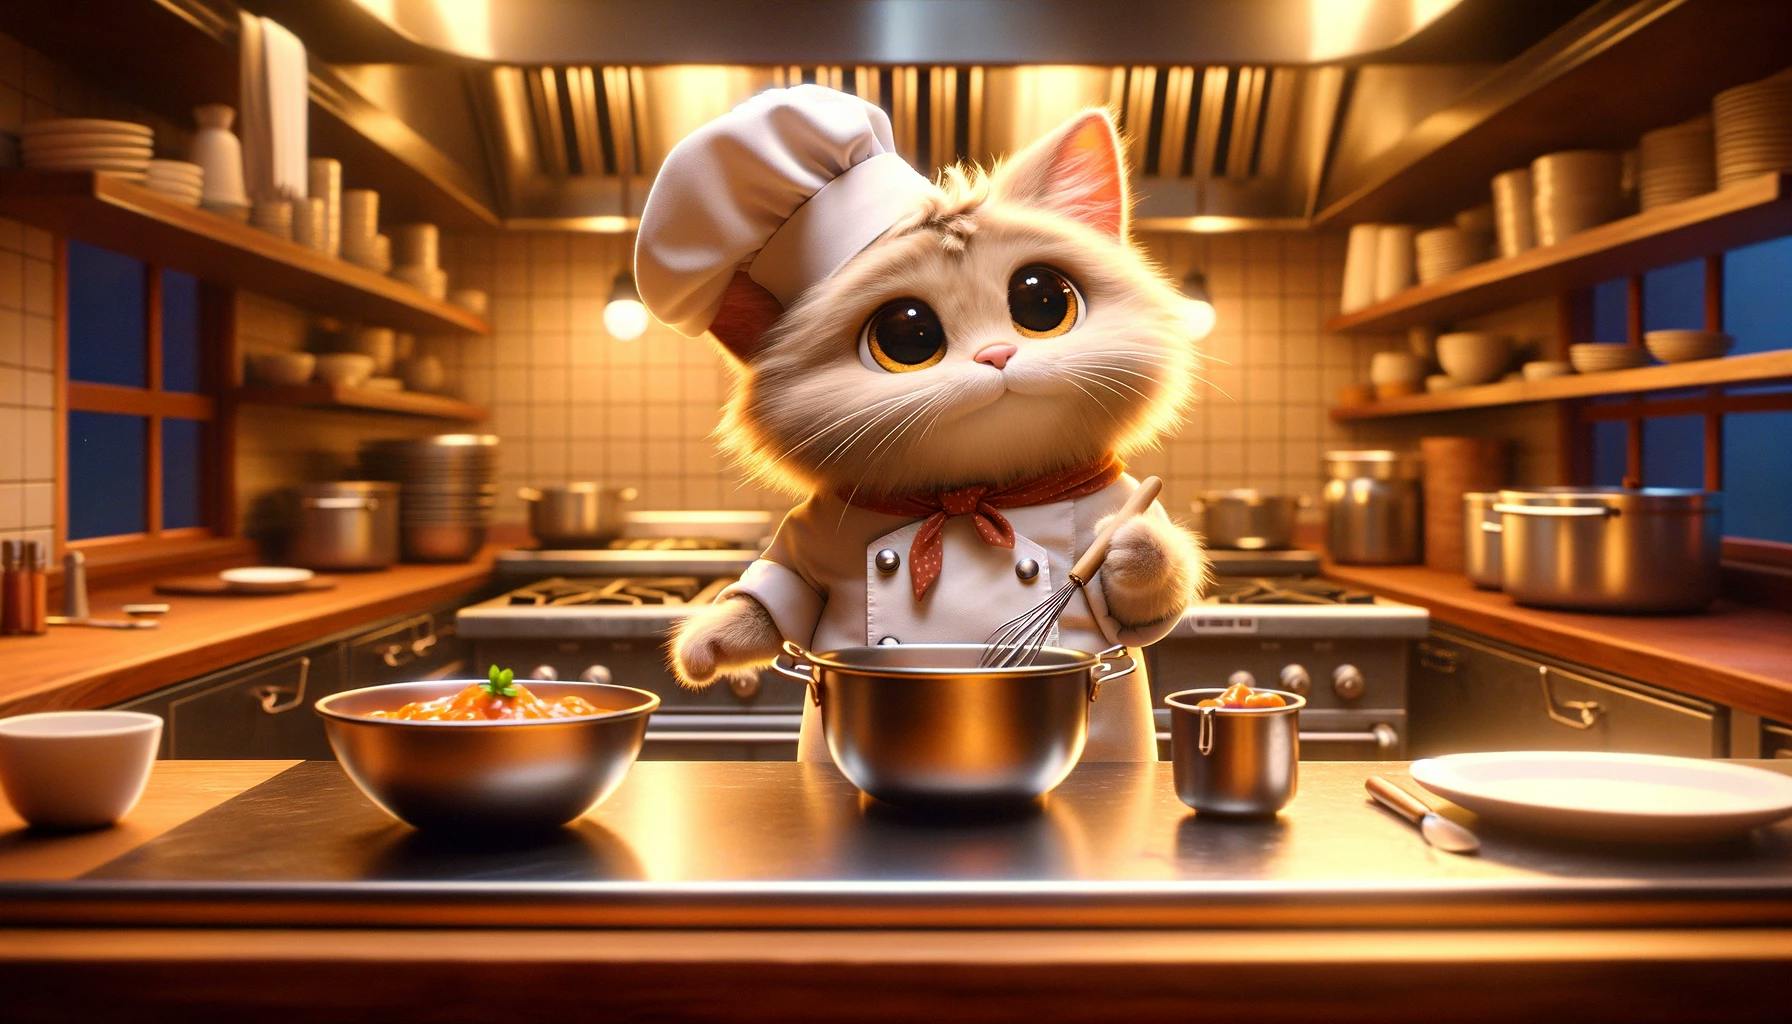 Random restaurant generator | Cat cooking meal